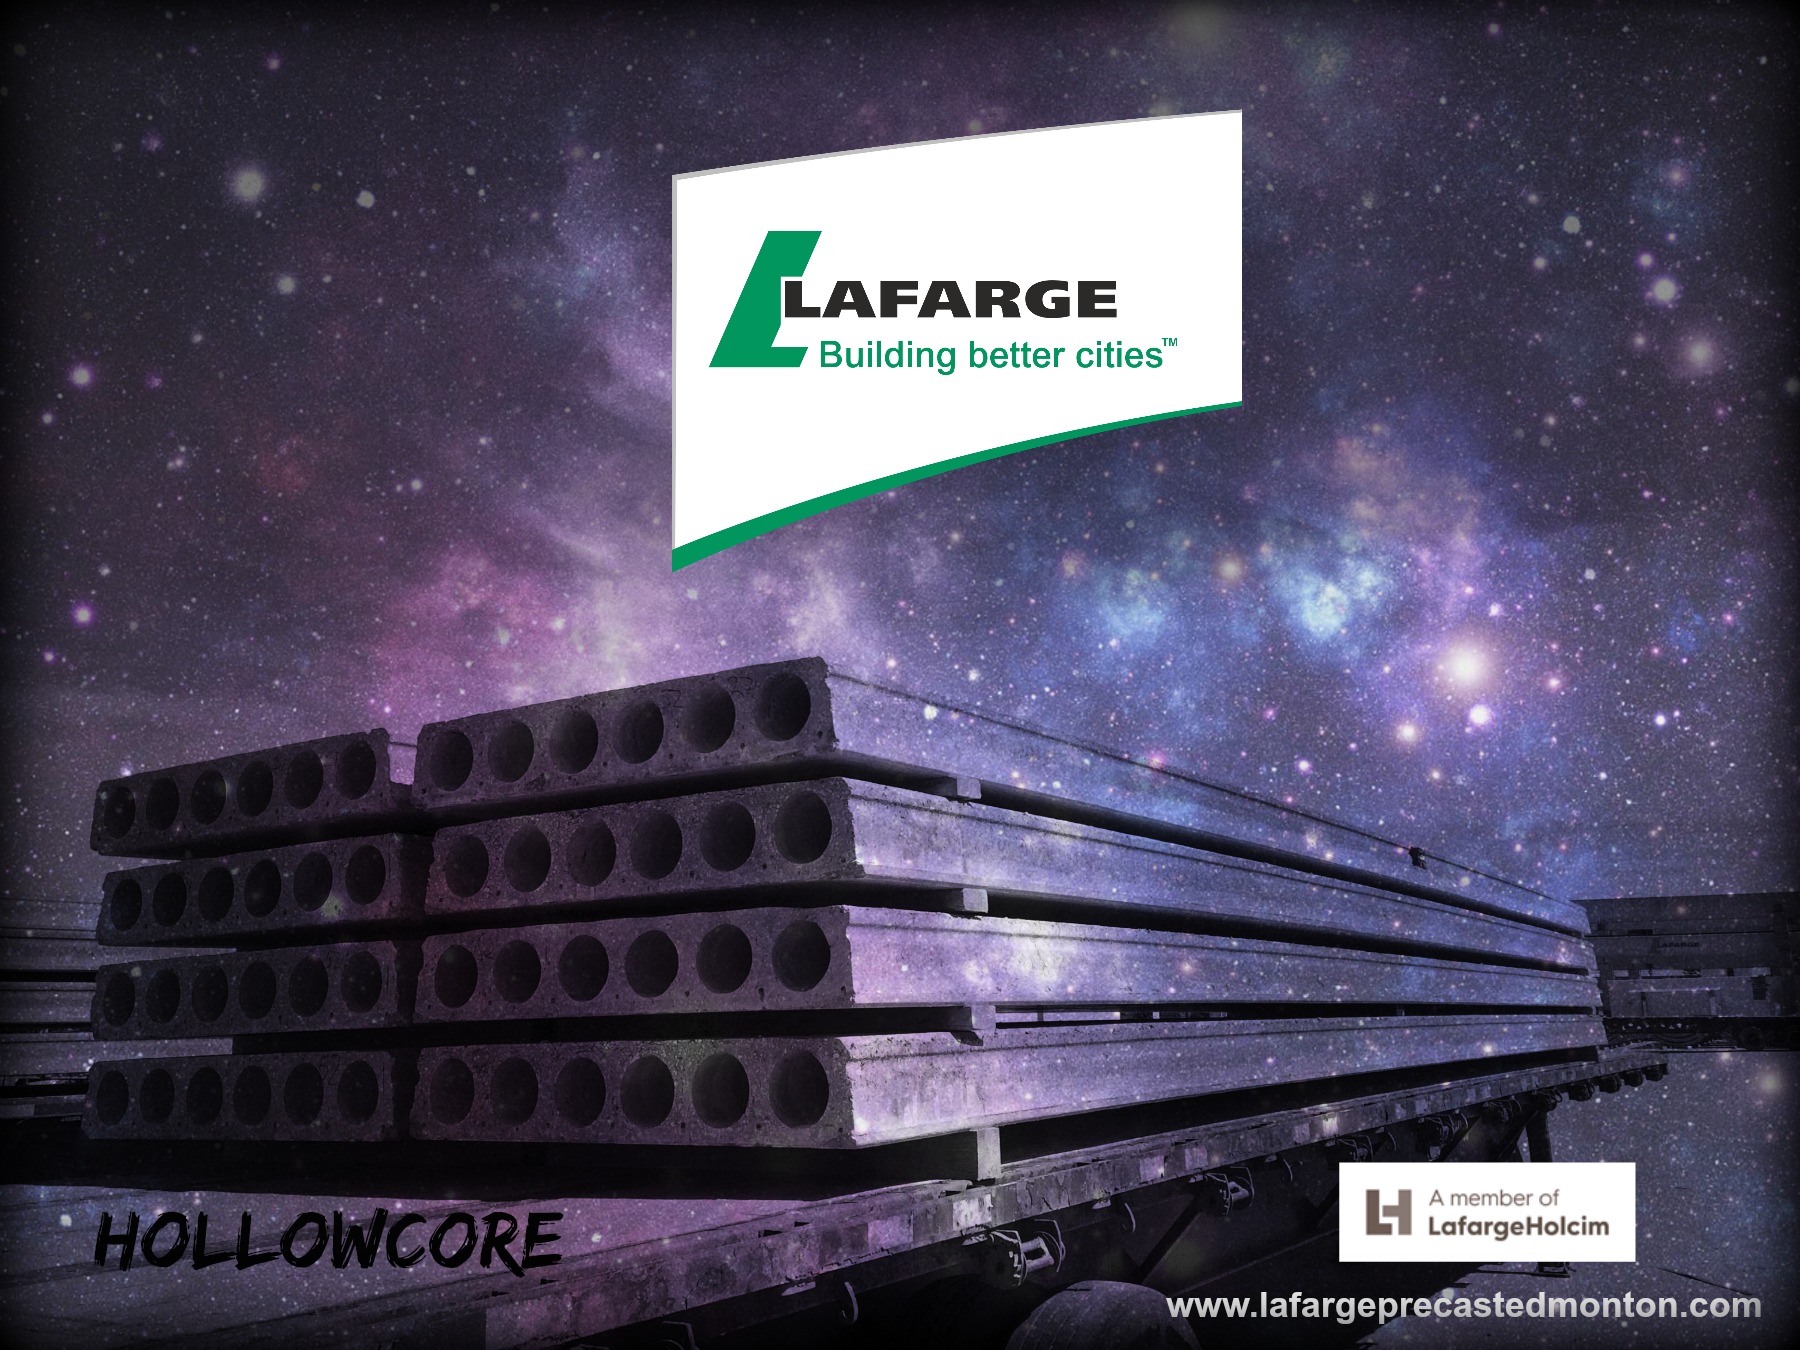 hollowcore-precast-concrete-floor-systems-by-lafarge-precast-edmonton